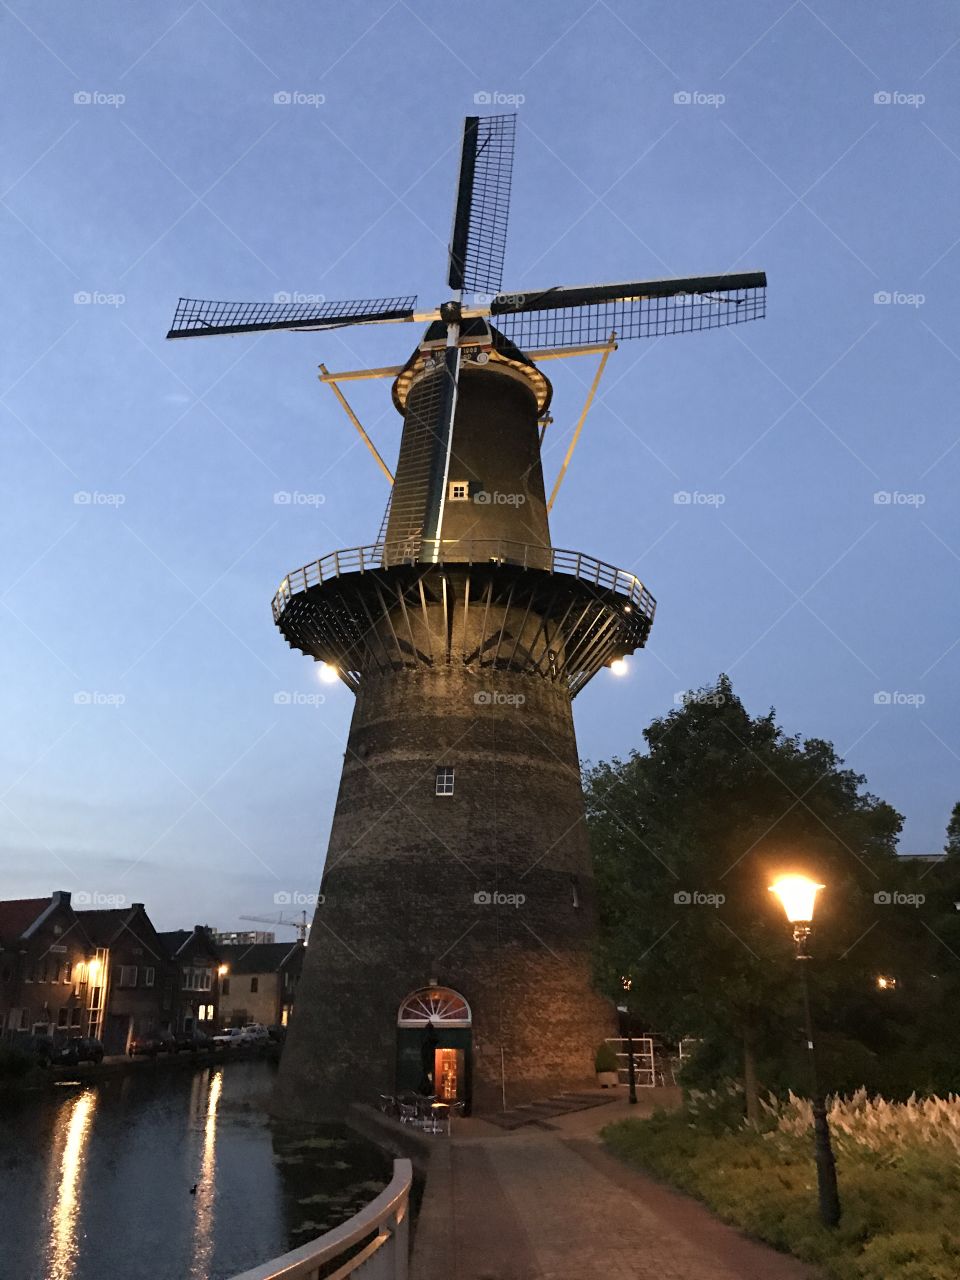 Windmill 
Netherlands 
Dusk
Evening 
Old
